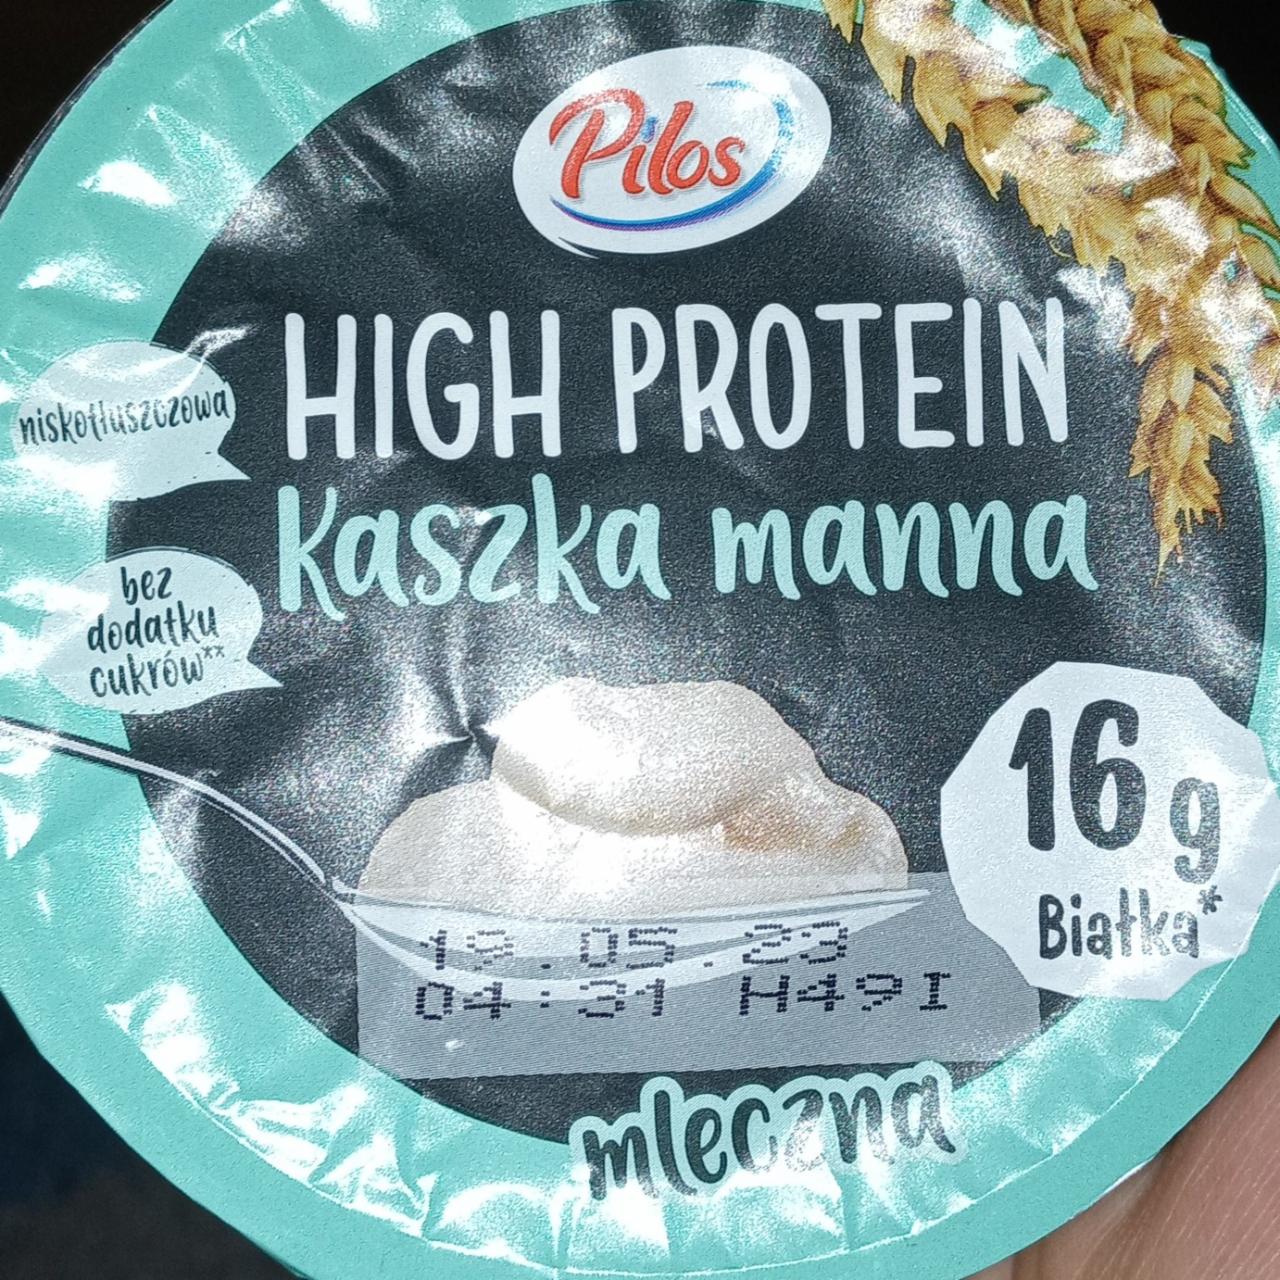 Zdjęcia - High protein kaszka manna Pilos